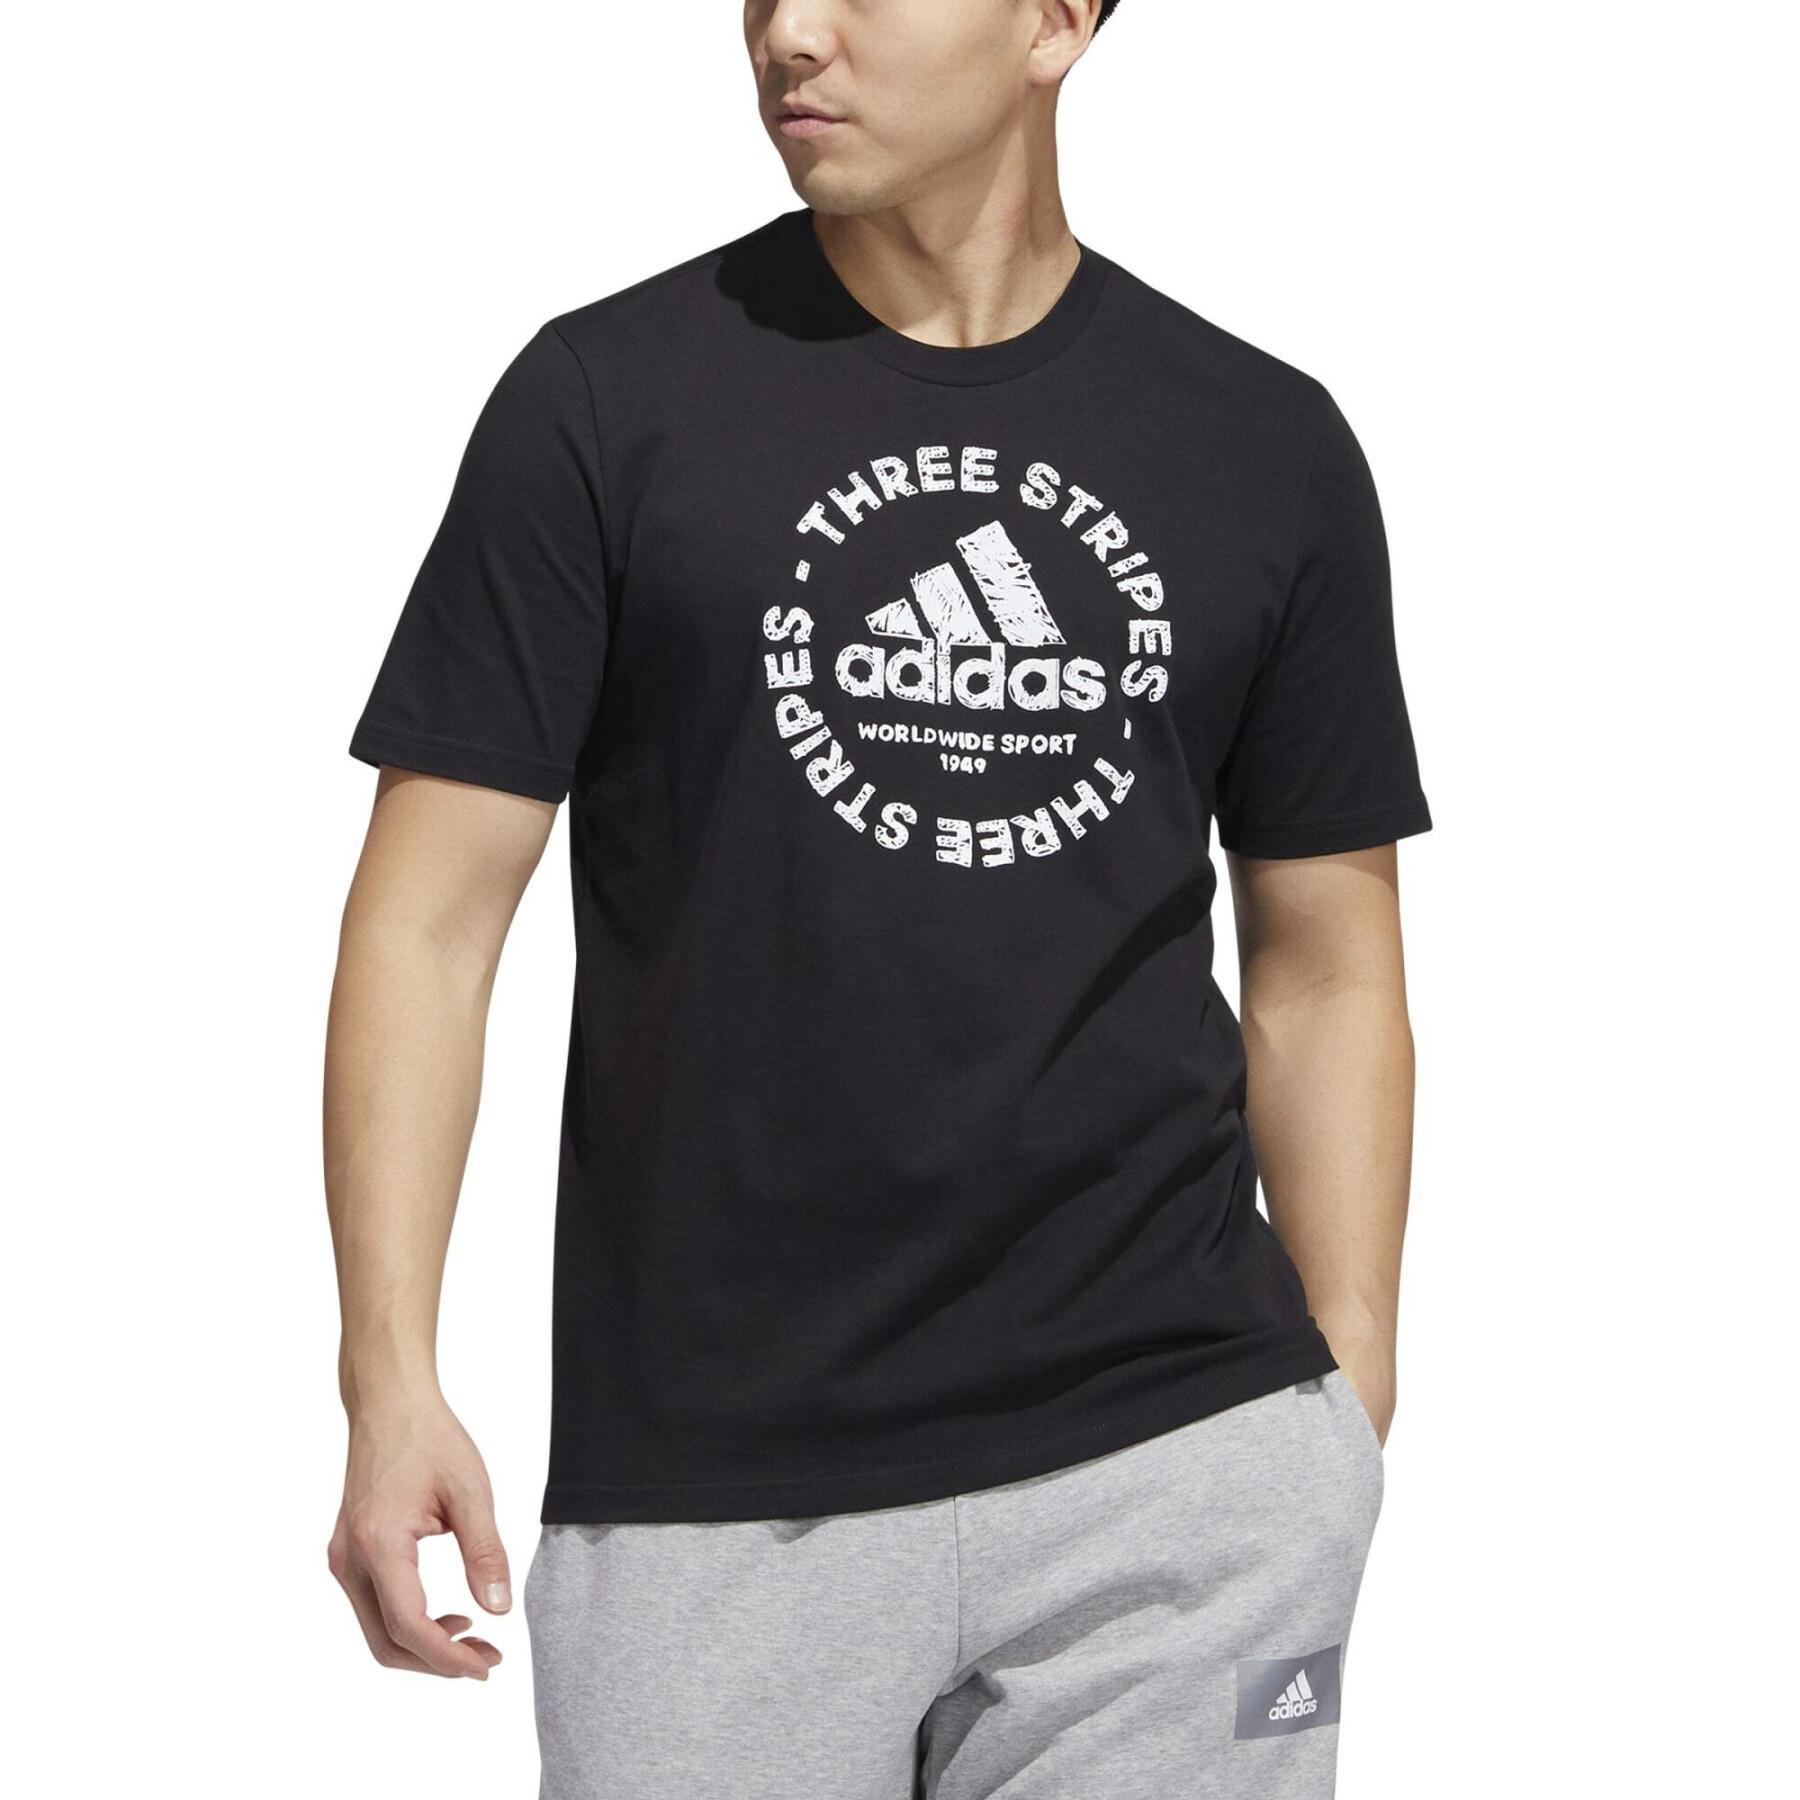 Graphic T-shirt emblem of sketch adidas